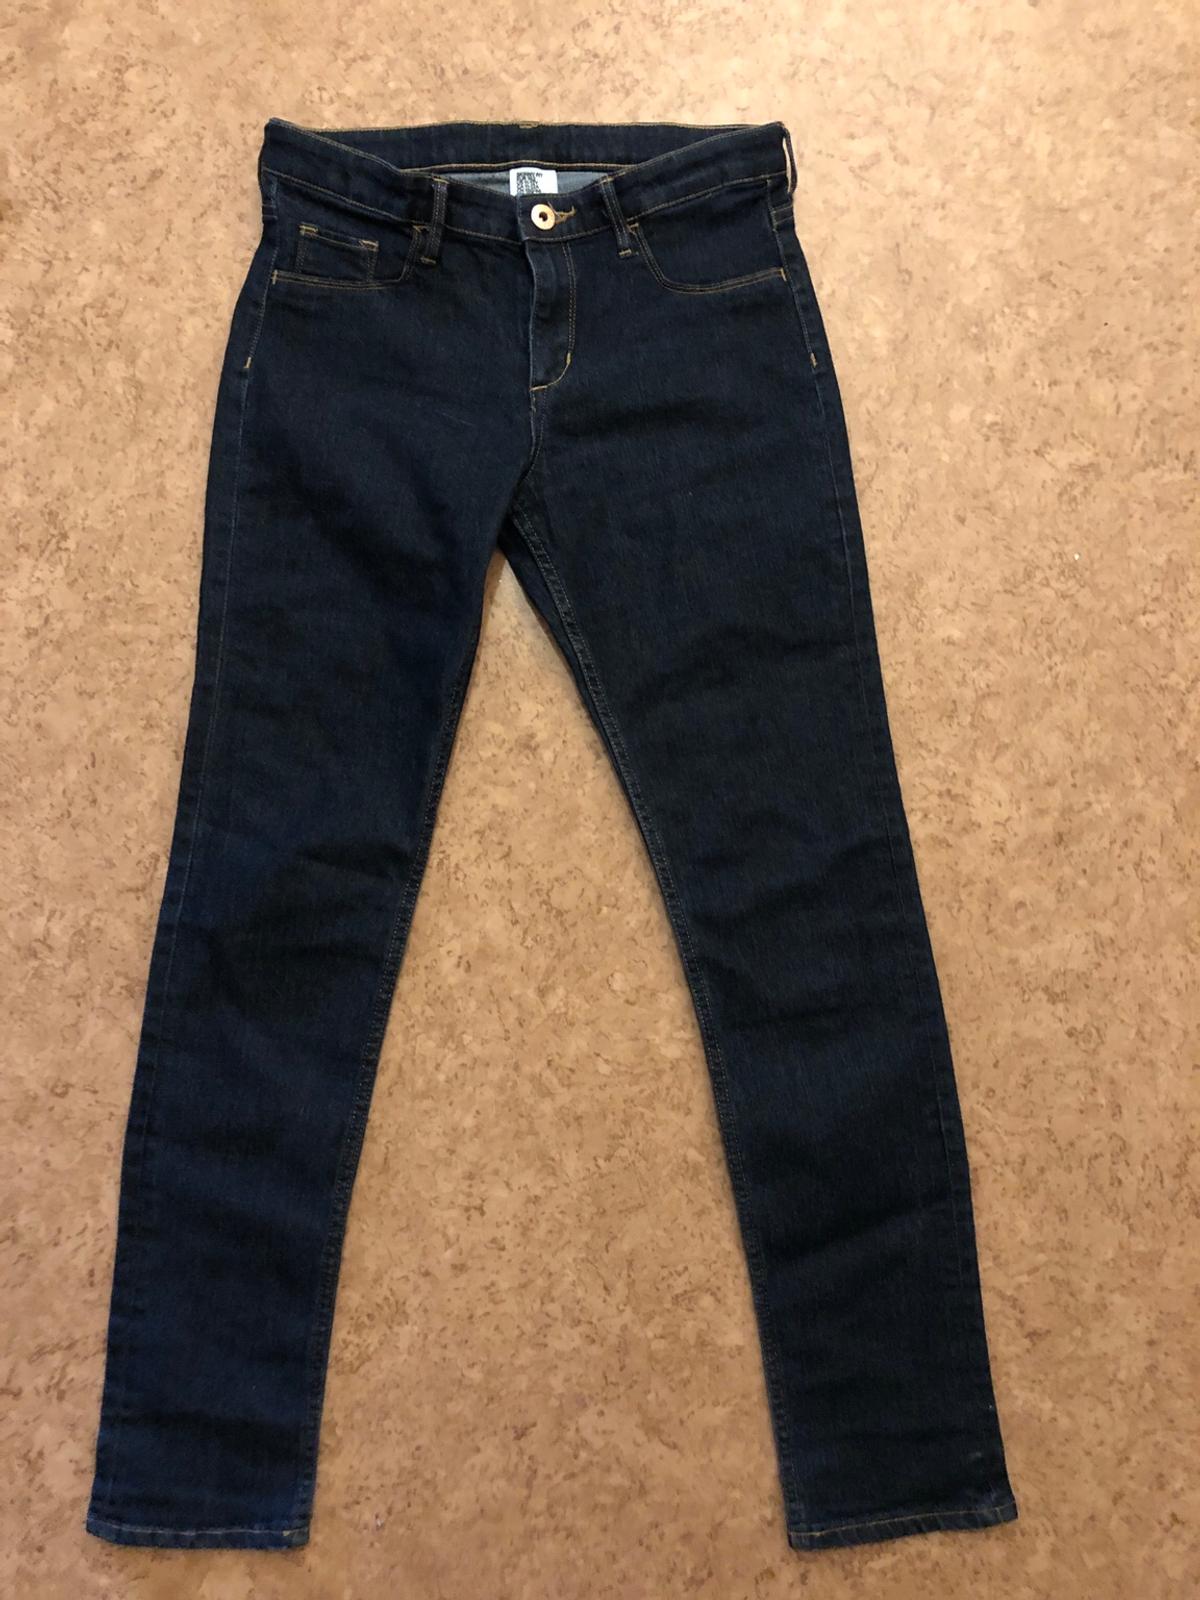 Jeans i storlek 152